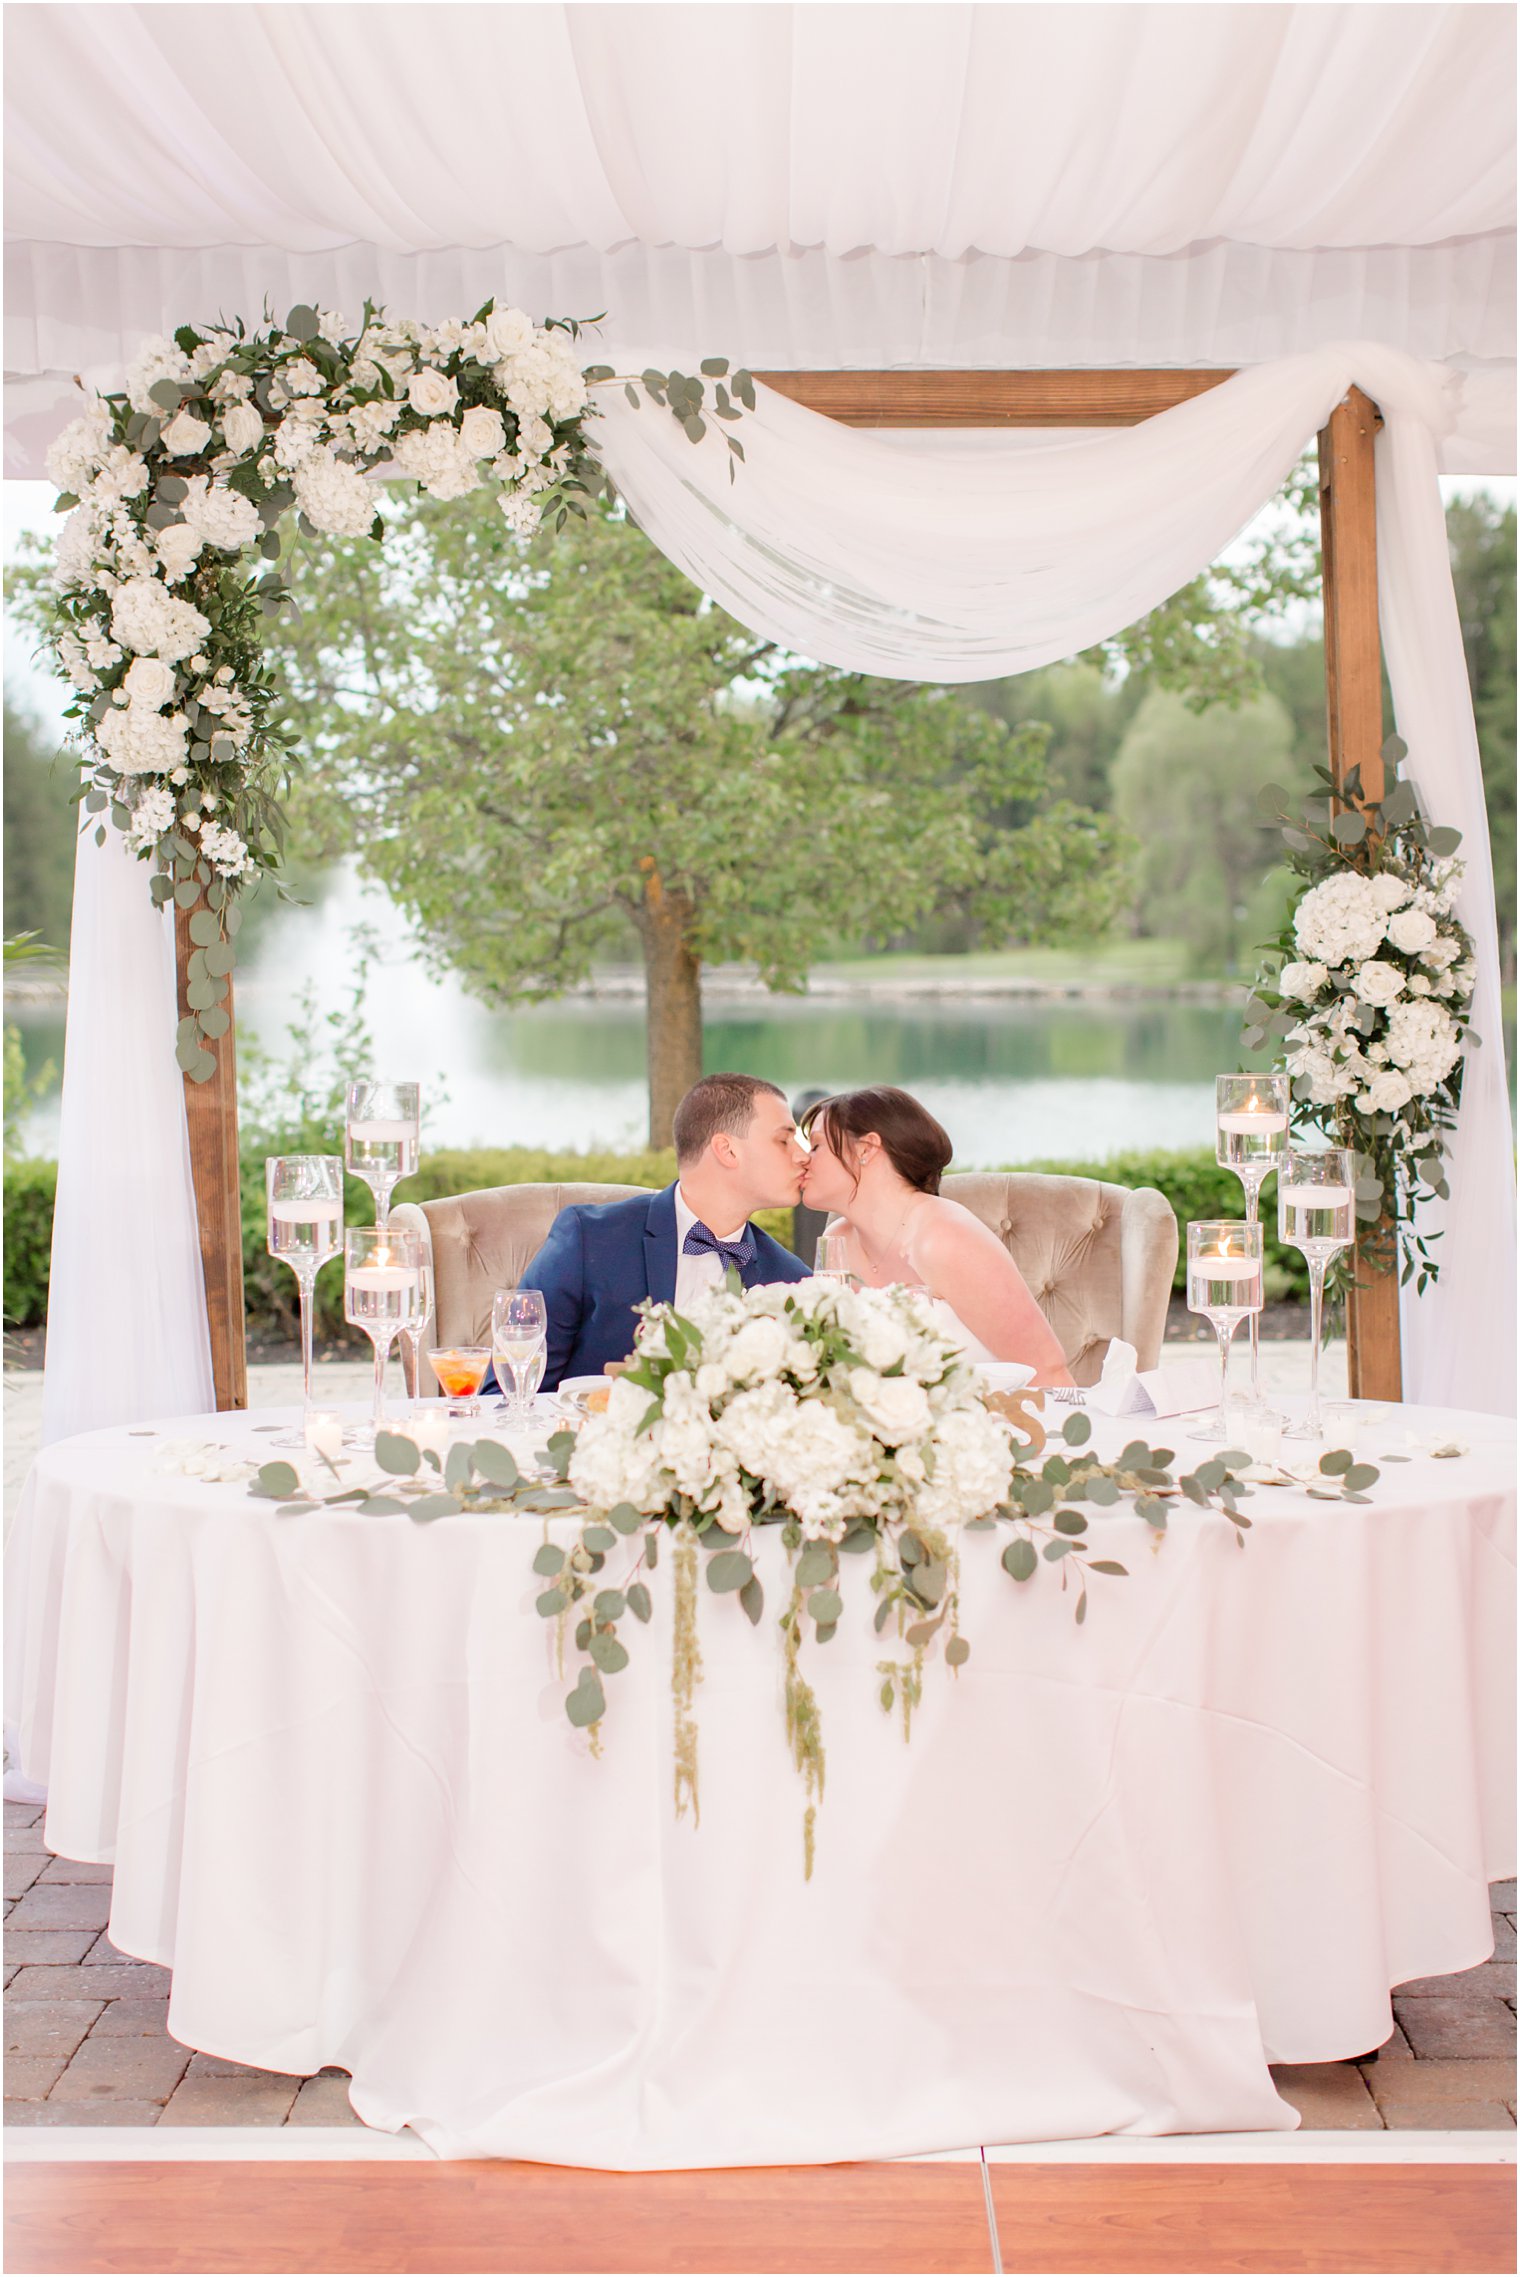 Wedding sweetheart table at Windows on the Water at Frogbridge in Millstone NJ